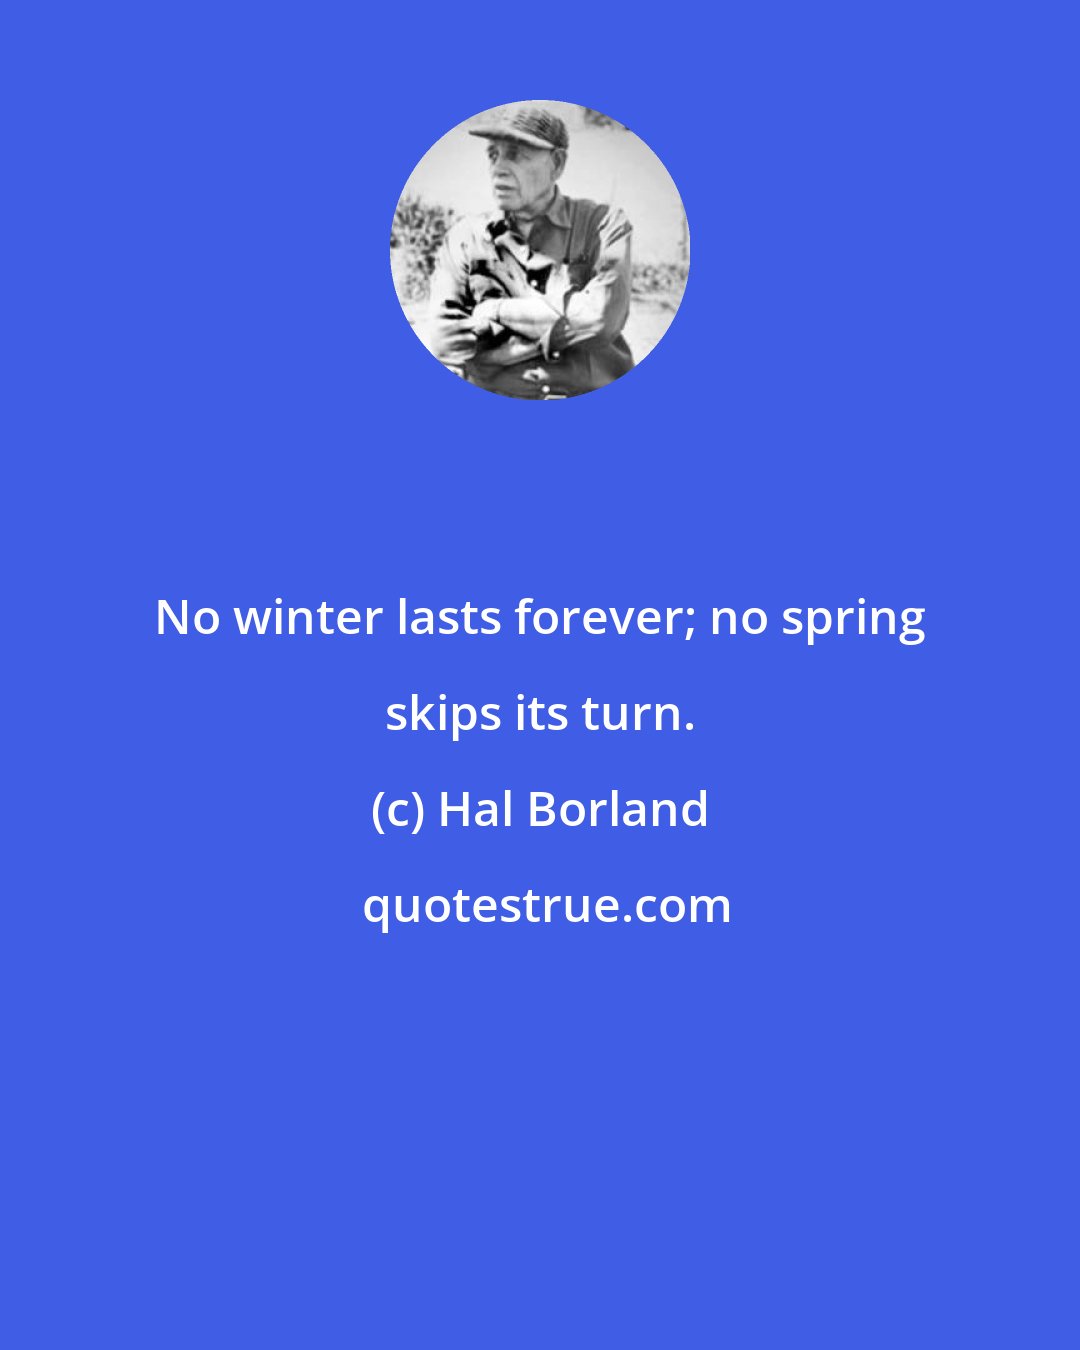 Hal Borland: No winter lasts forever; no spring skips its turn.